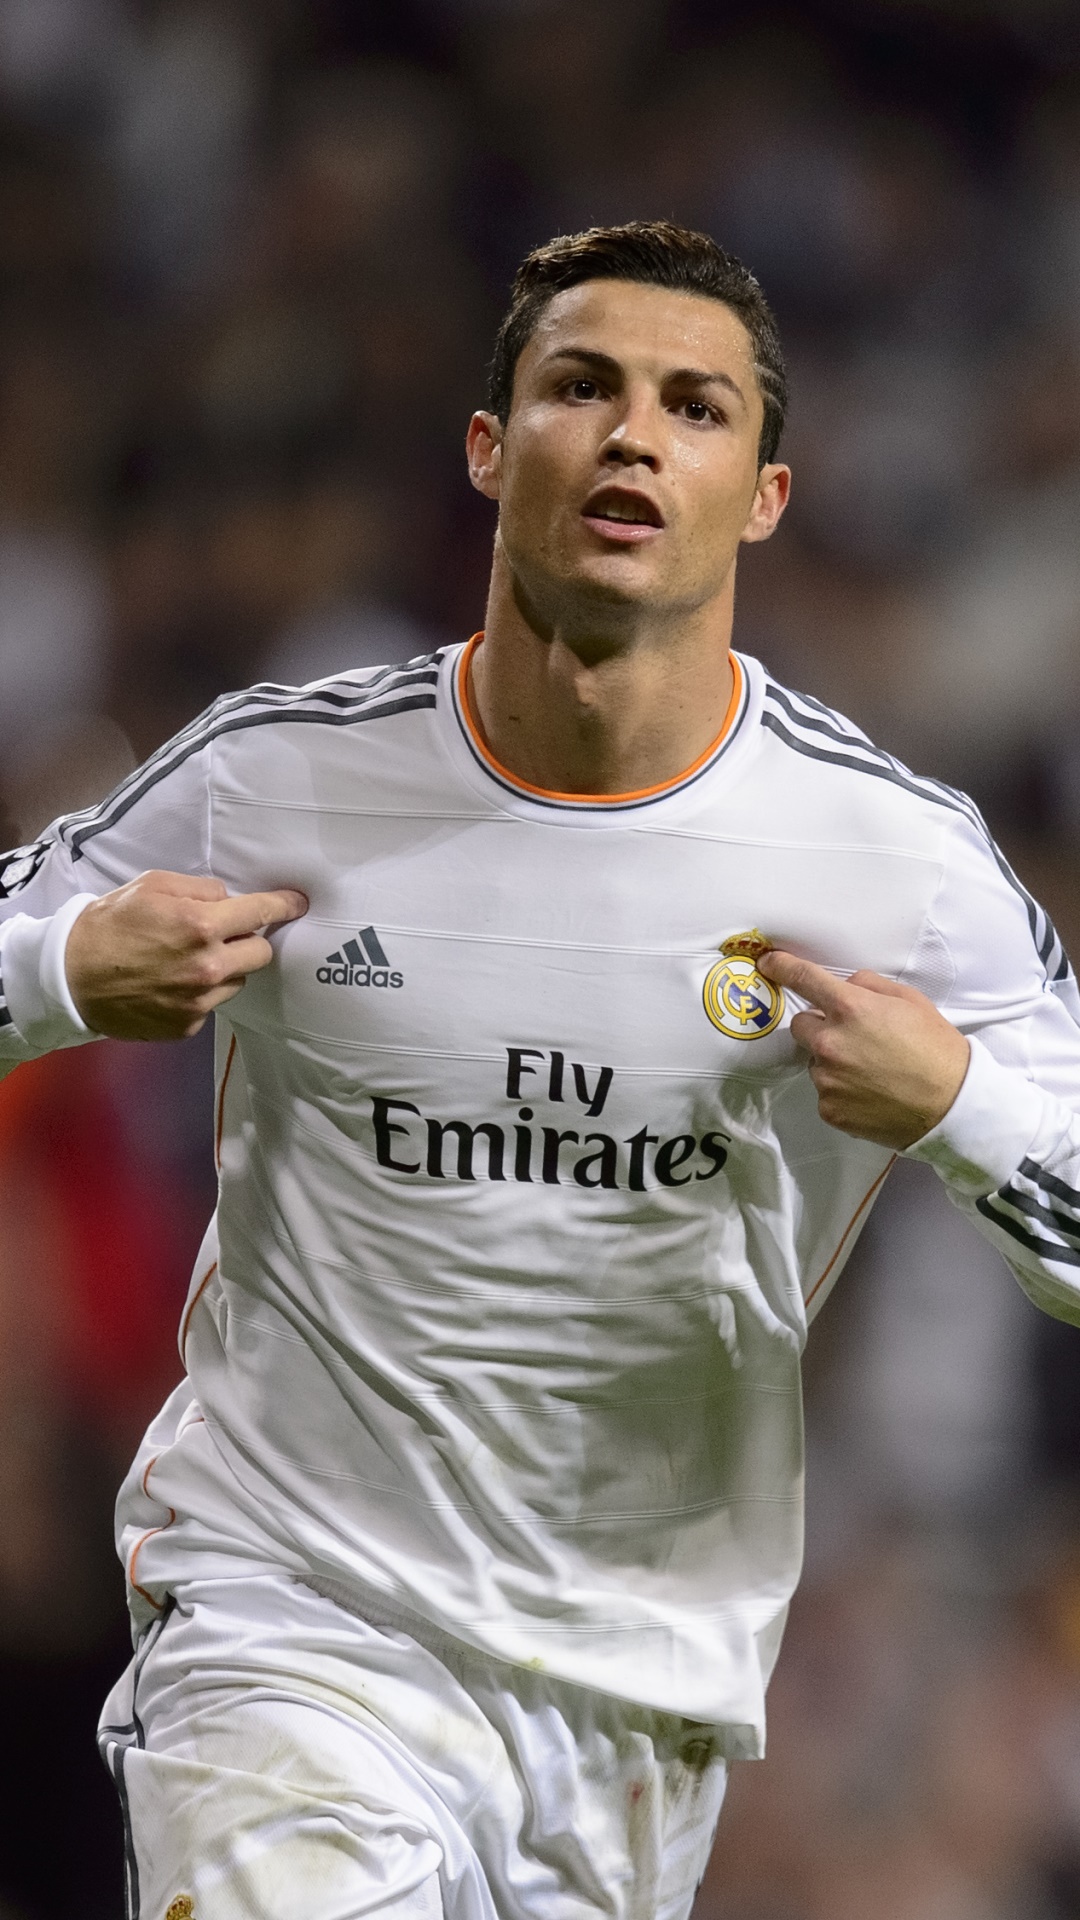 Wallpaper / Sports Cristiano Ronaldo Phone Wallpaper, Soccer, Real Madrid C.F., Portuguese, 1080x1920 free download